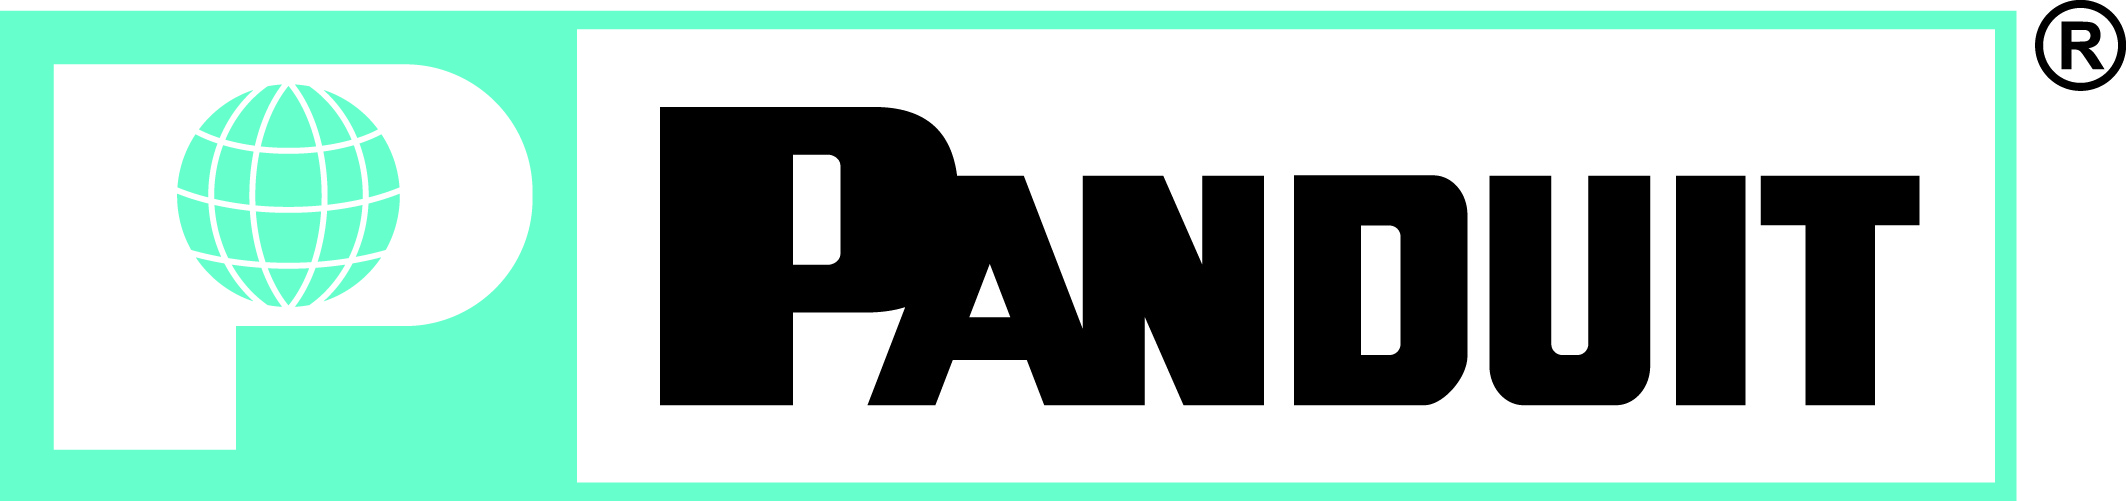 Panduit_logo